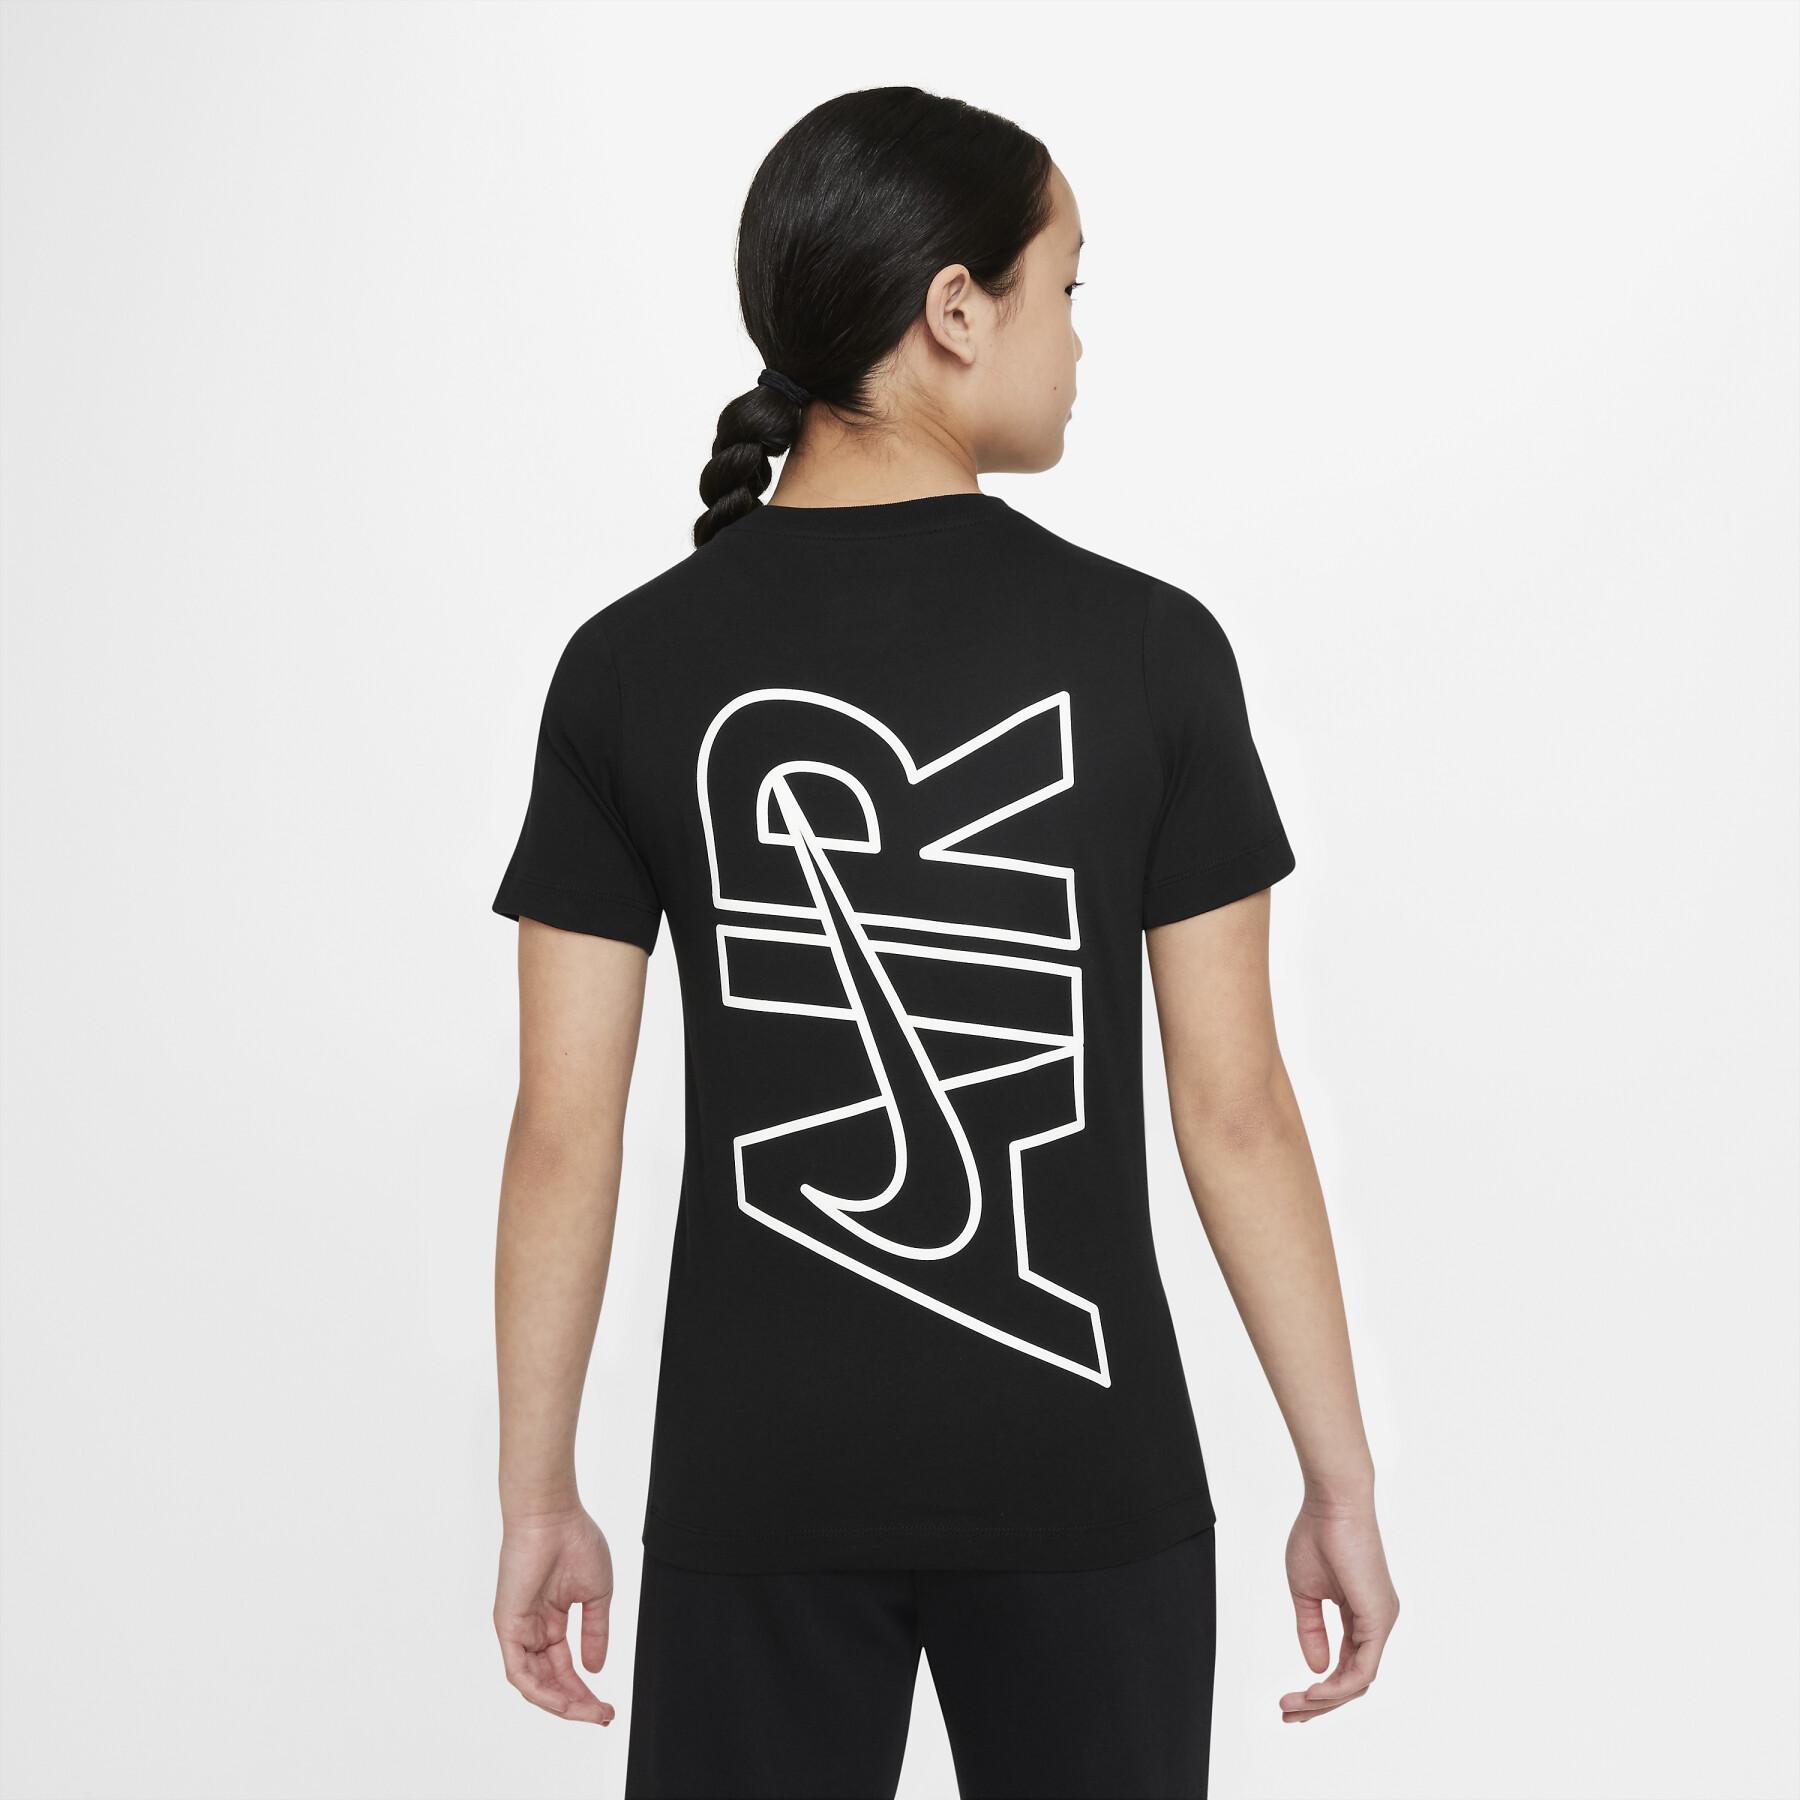 Meisjes-T-shirt Nike Air